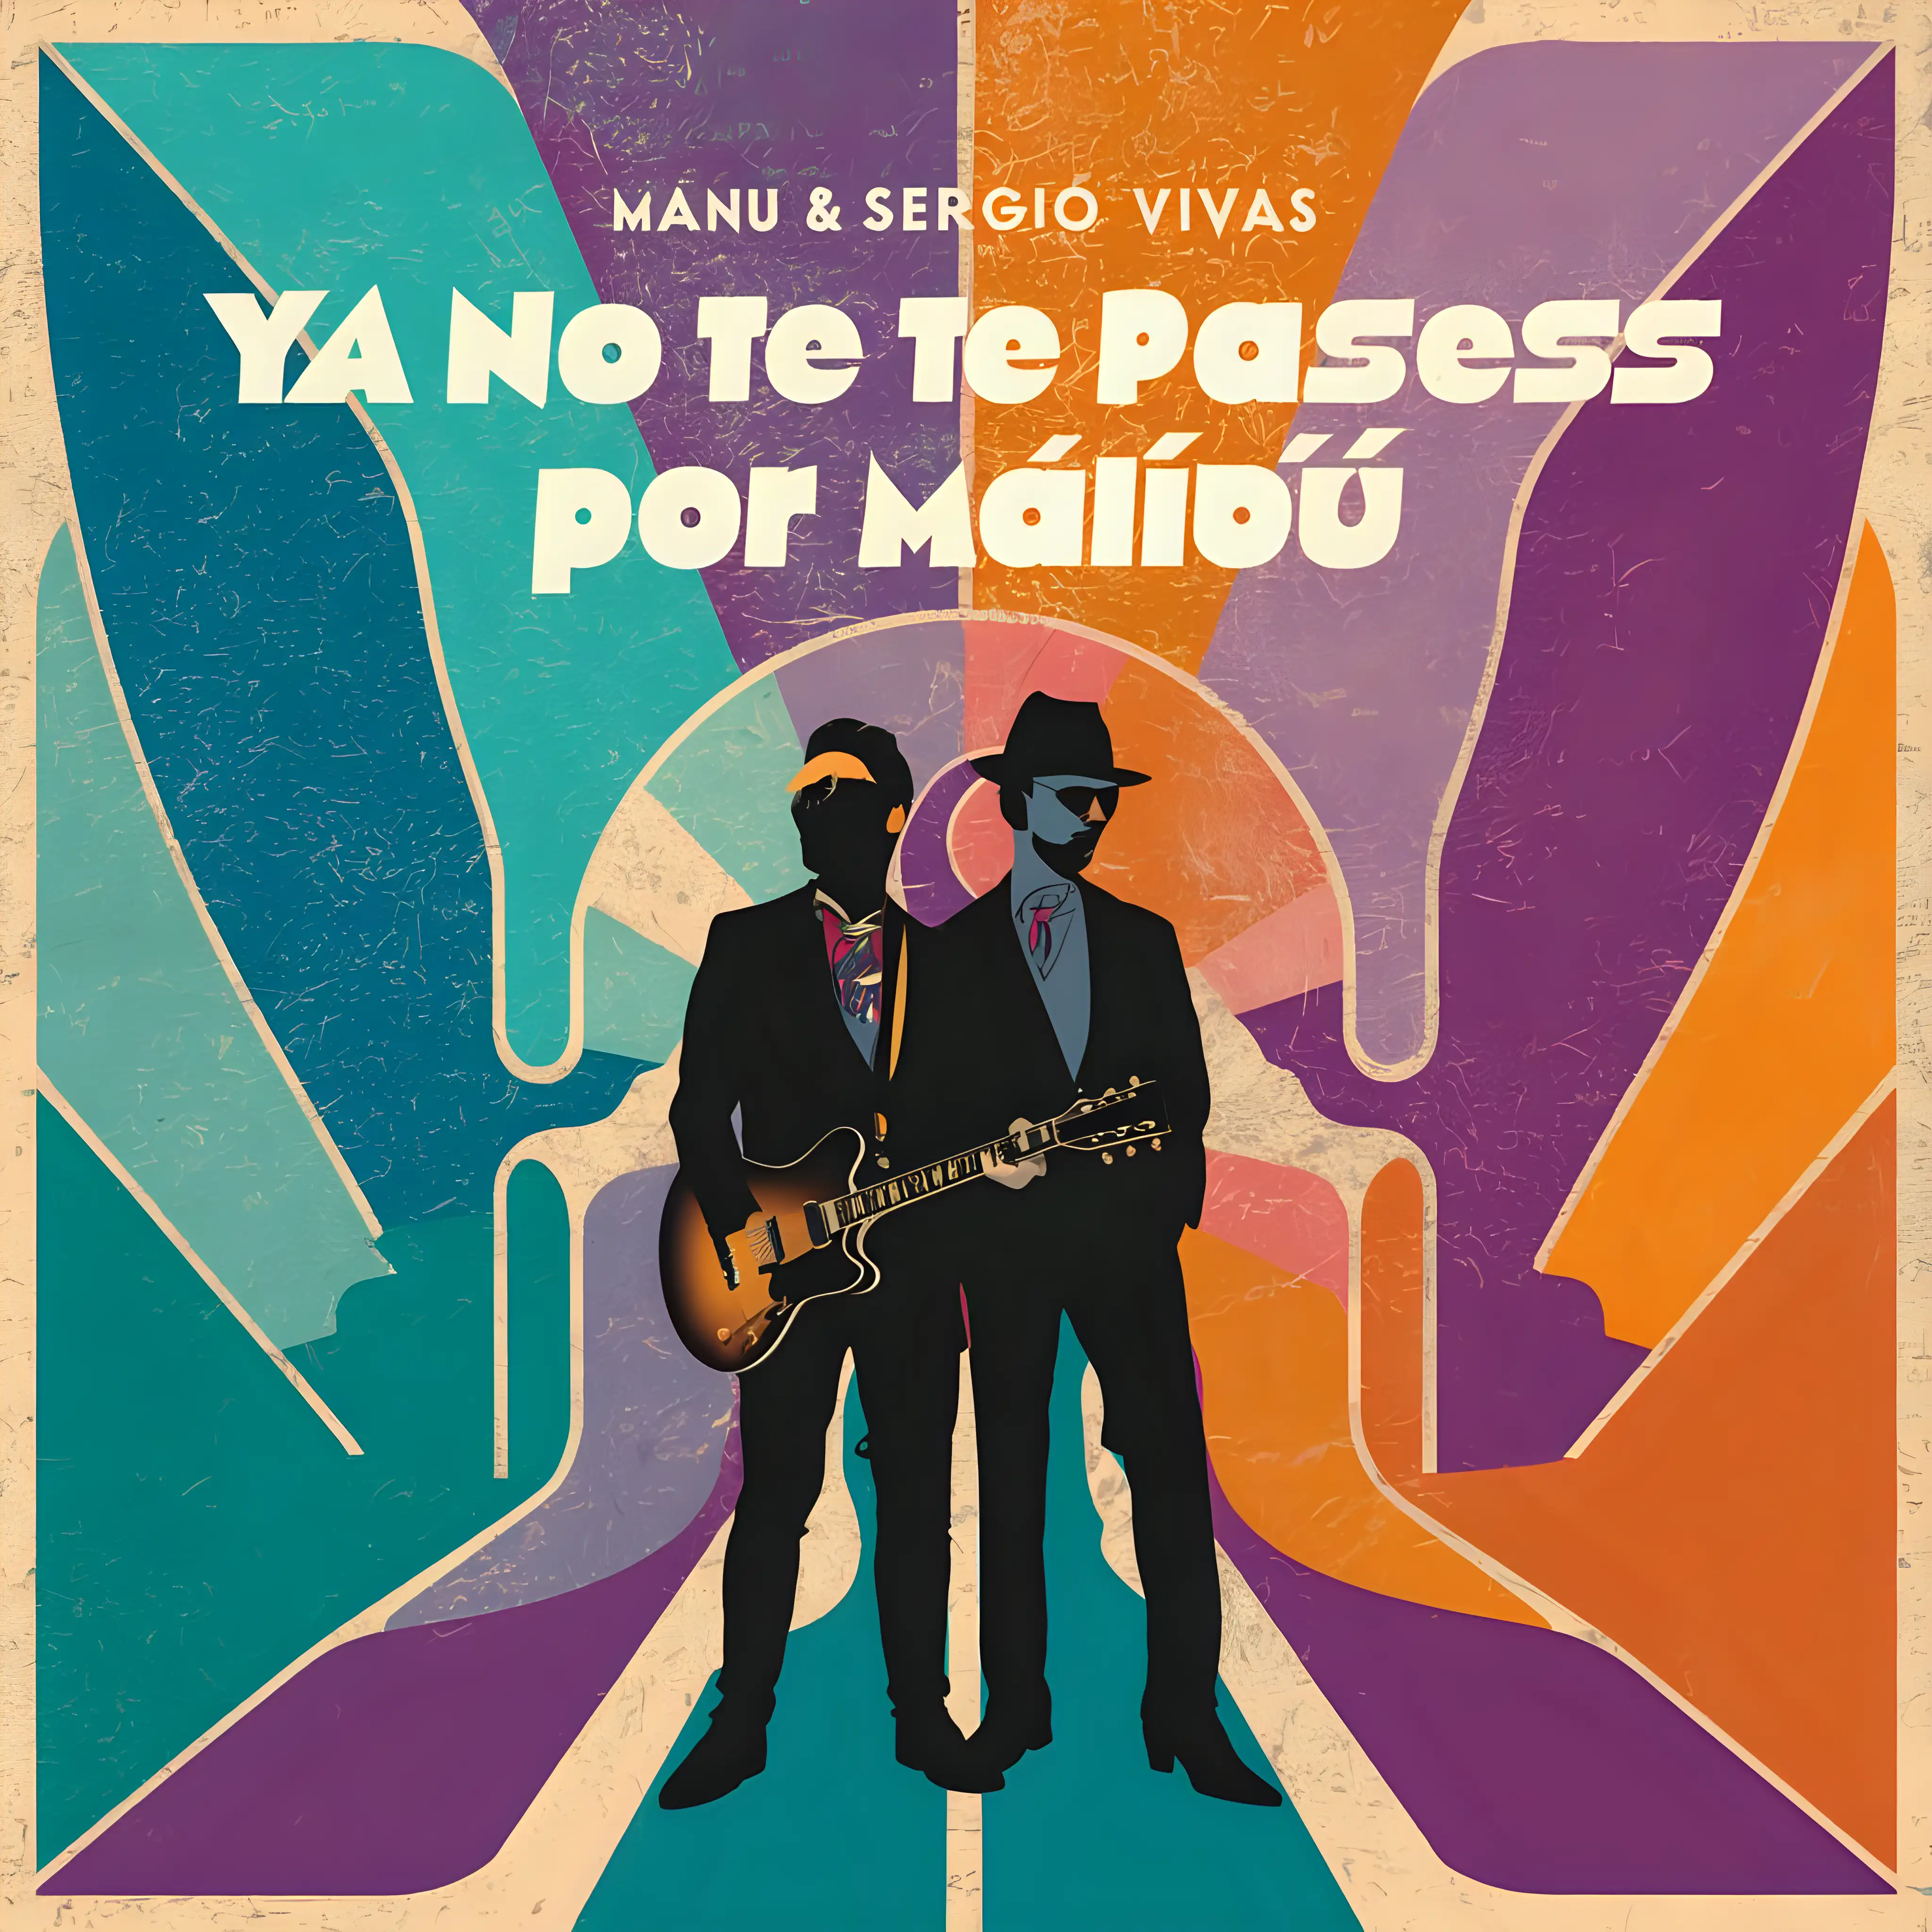 Eclectic Cover Art for Ya no te pases por Malib by Manu Sergio VIVAS